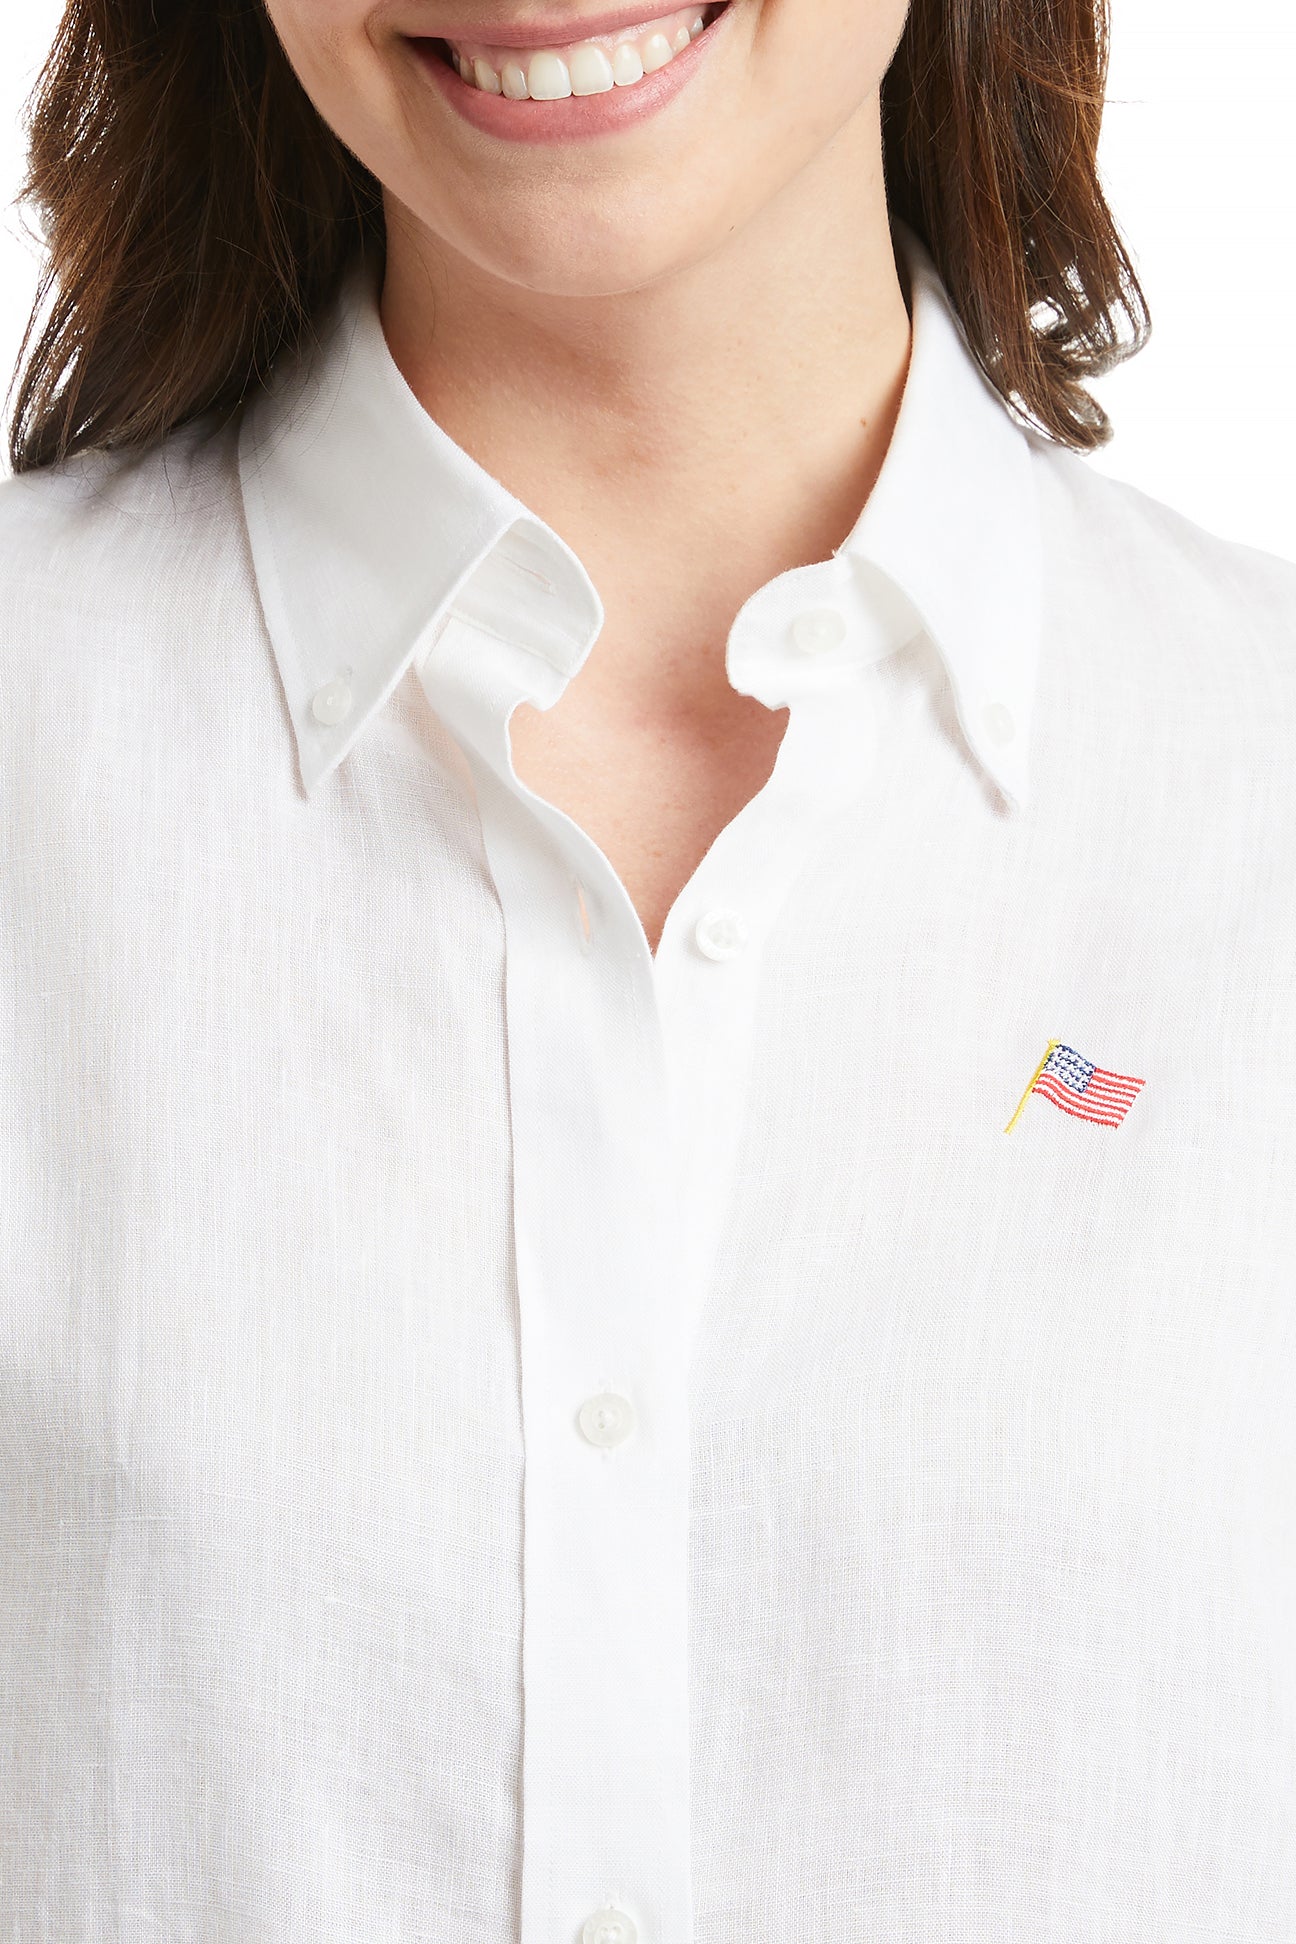 Ladies Button Down Shirt White Linen with USA Flag LADIES SHIRTS Castaway Nantucket Island